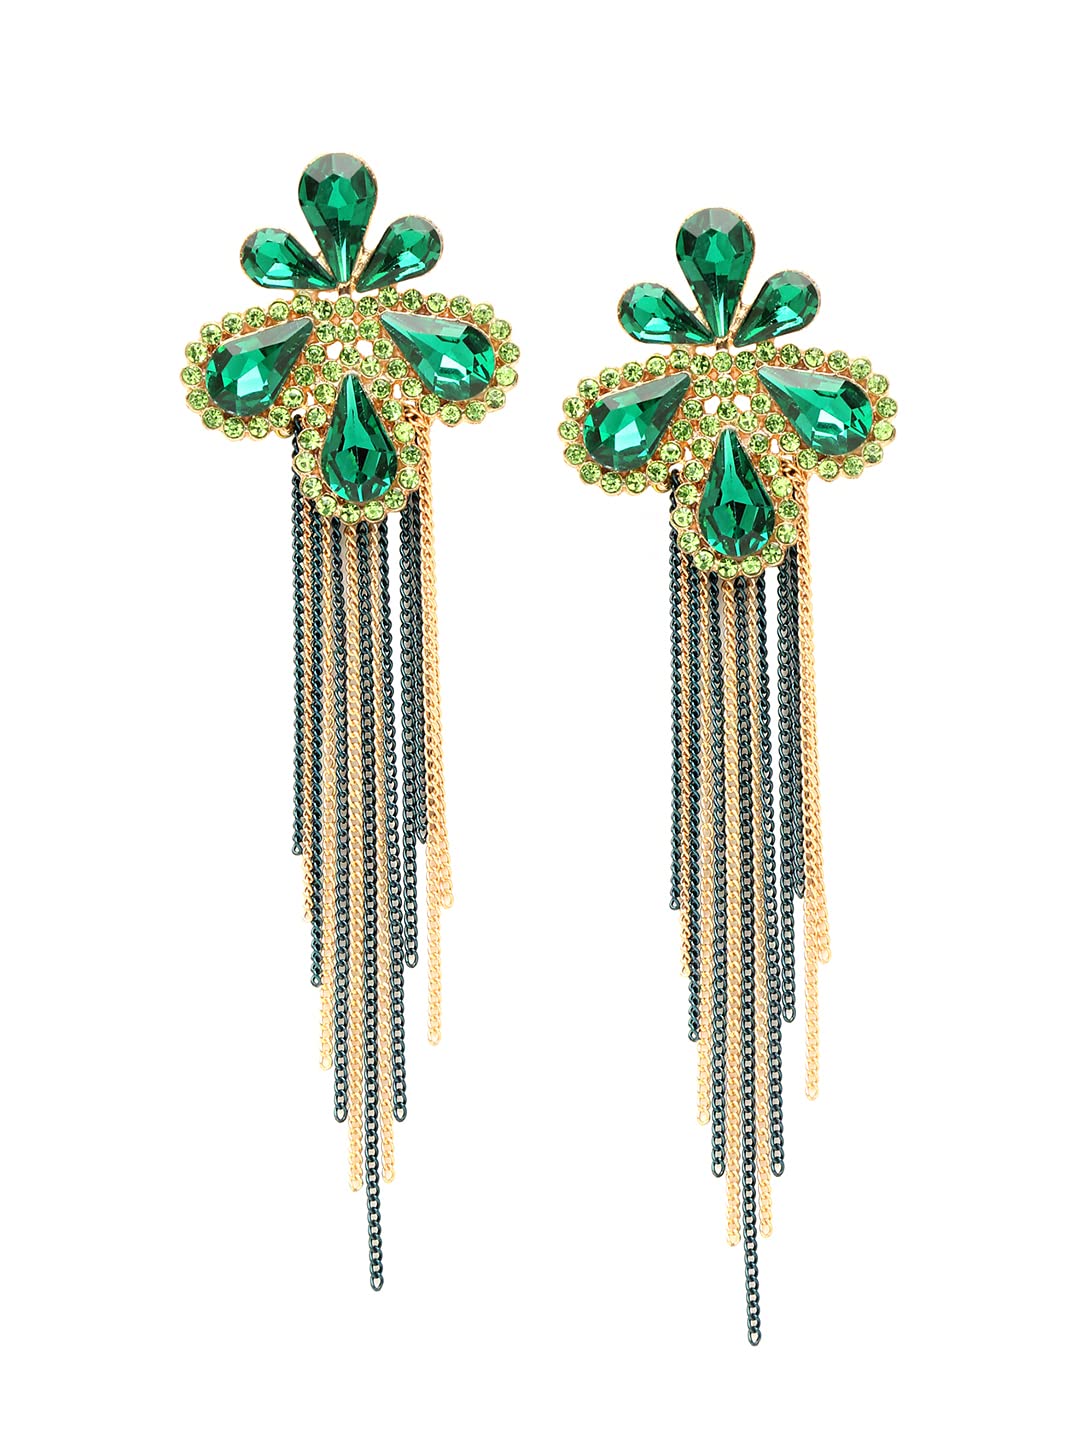 Yellow Chimes Crystal Danglers Earrings for Women Floral Shaped Crystal Long Chain Dangler Earrings for Women and Girls (Green)